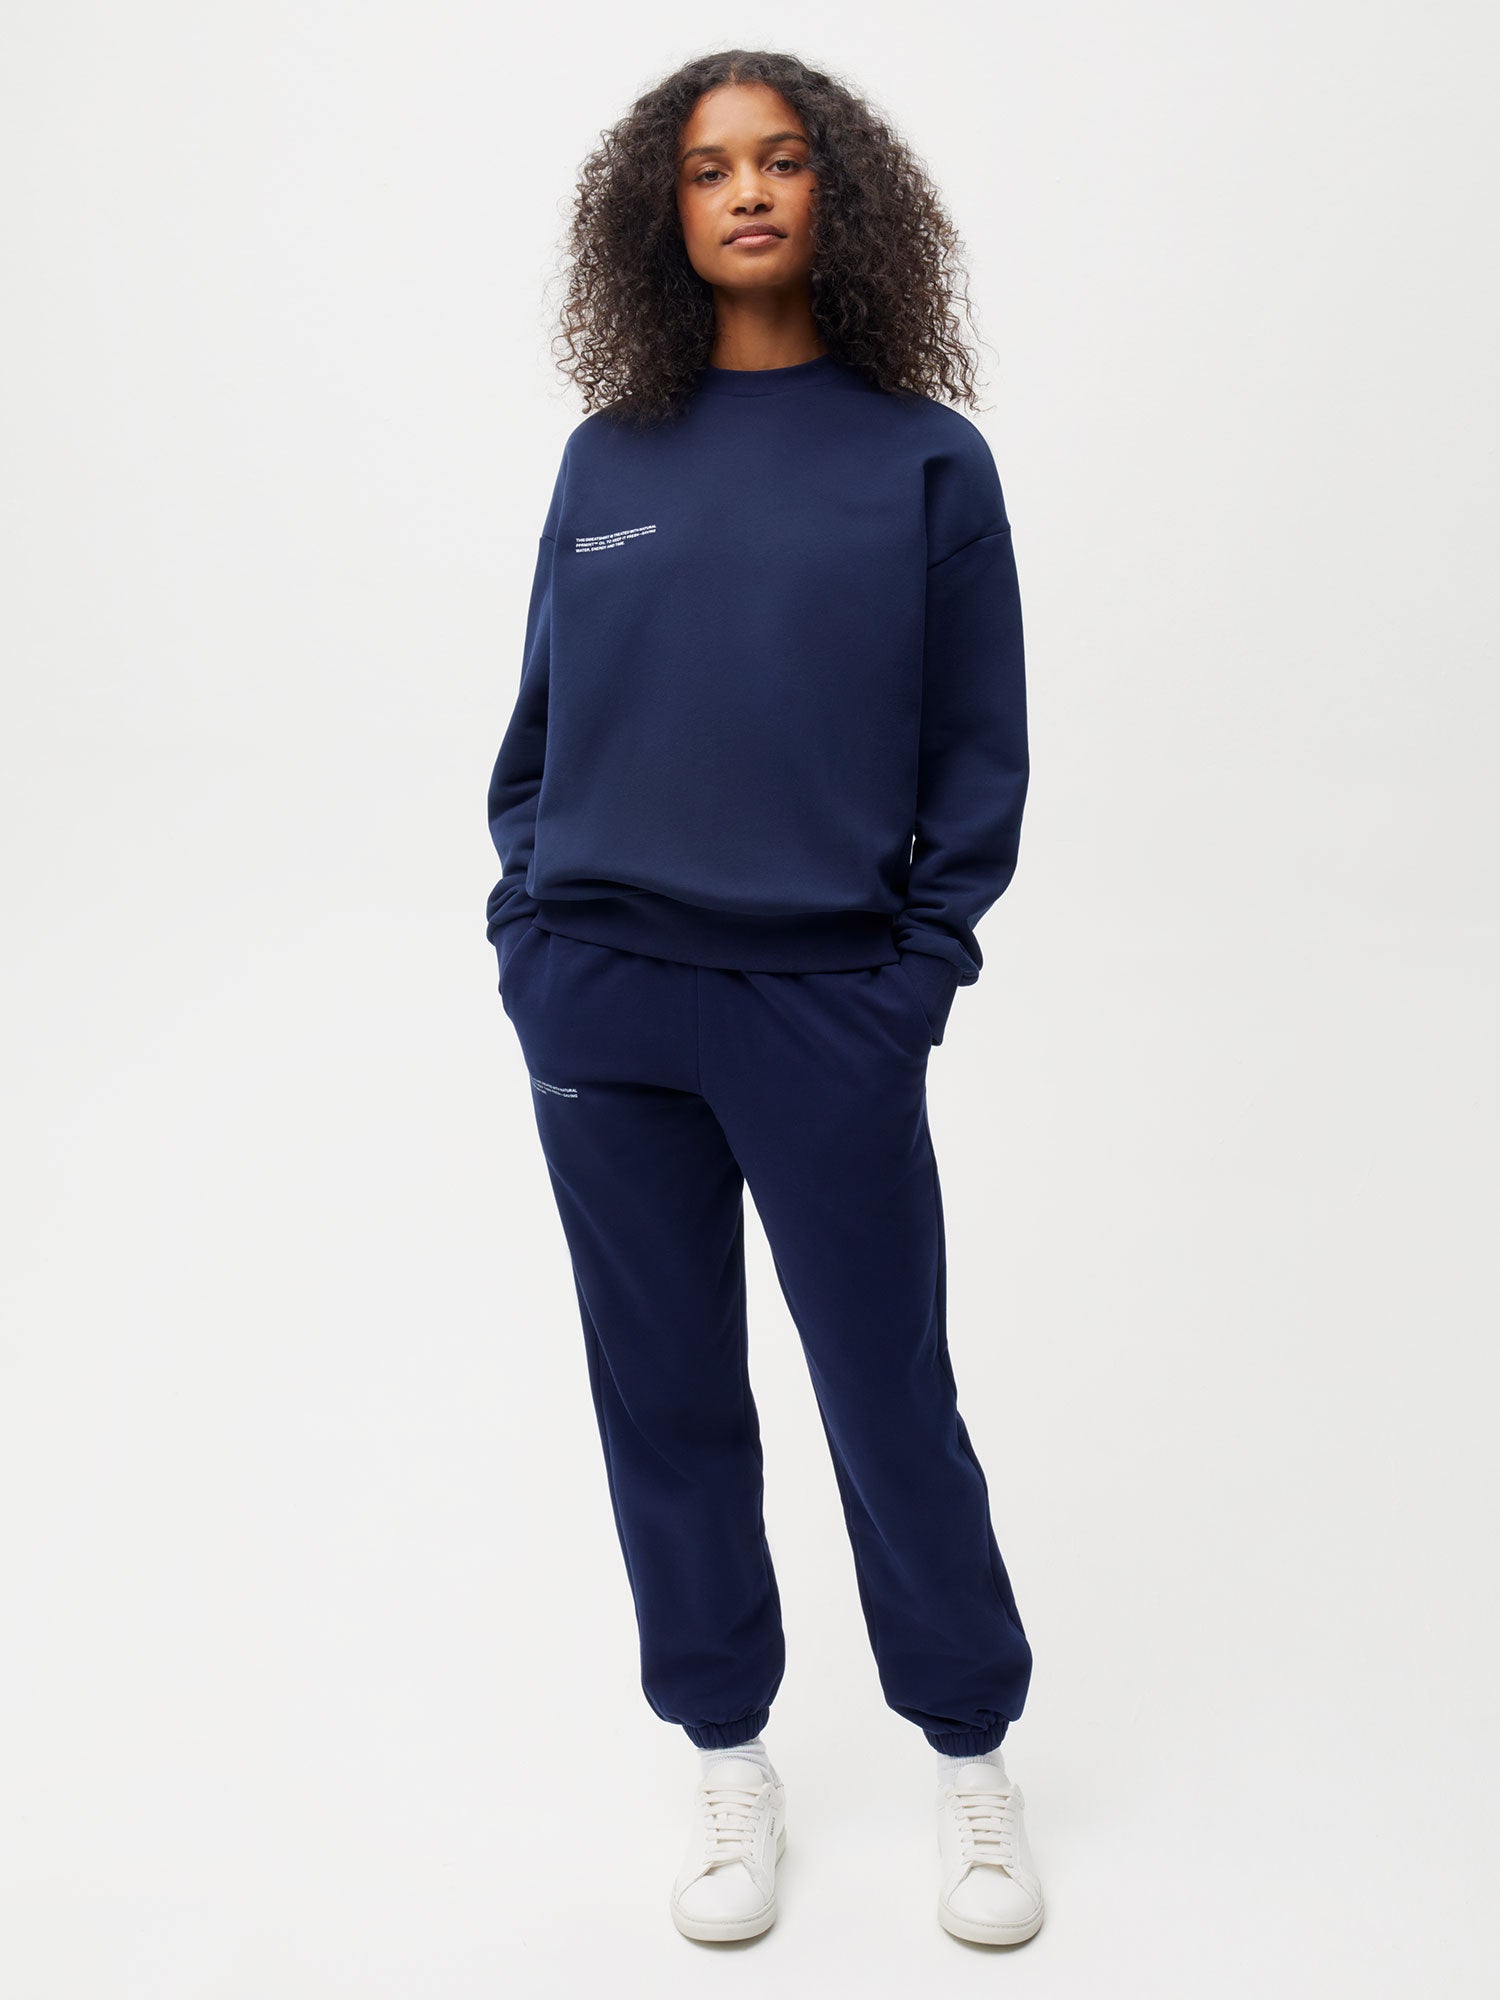 Womens Pack of 2 Blue Printed Trackpants JoggersActivewear  GymwearSportswear Active Bottomwear